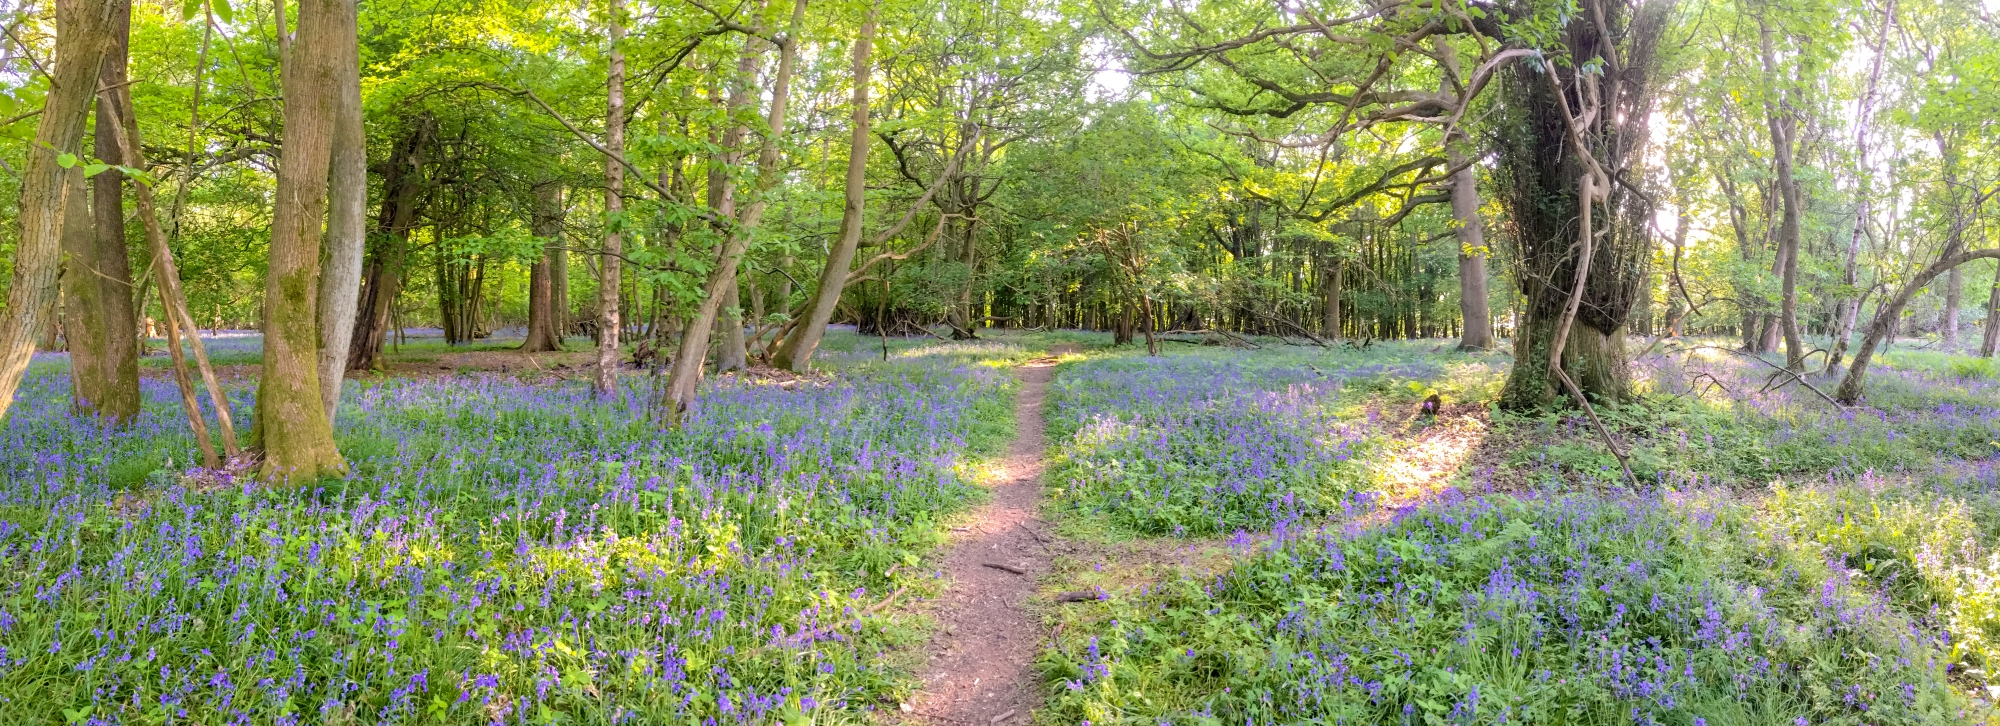 Bluebell Walk, Ashridge, Hertfordshire